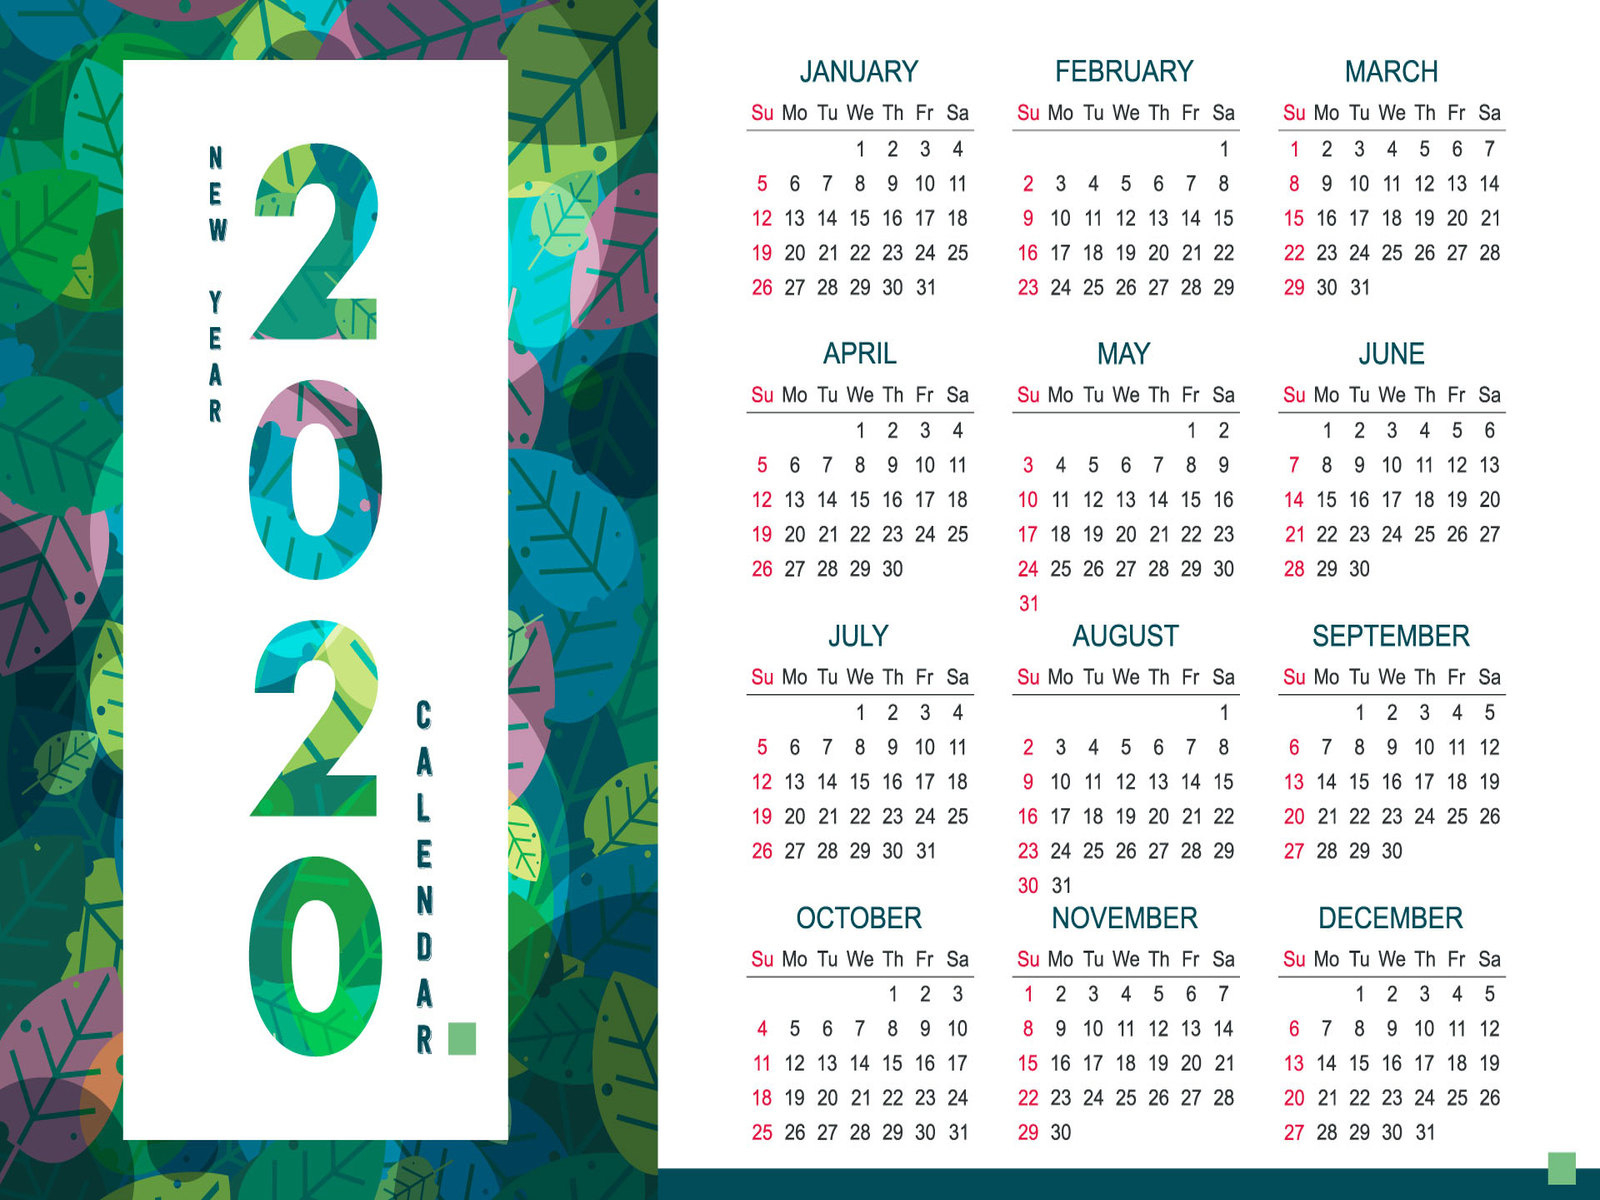 New Year 2020 Calendar Designmd Shopon Hossen On Dribbble